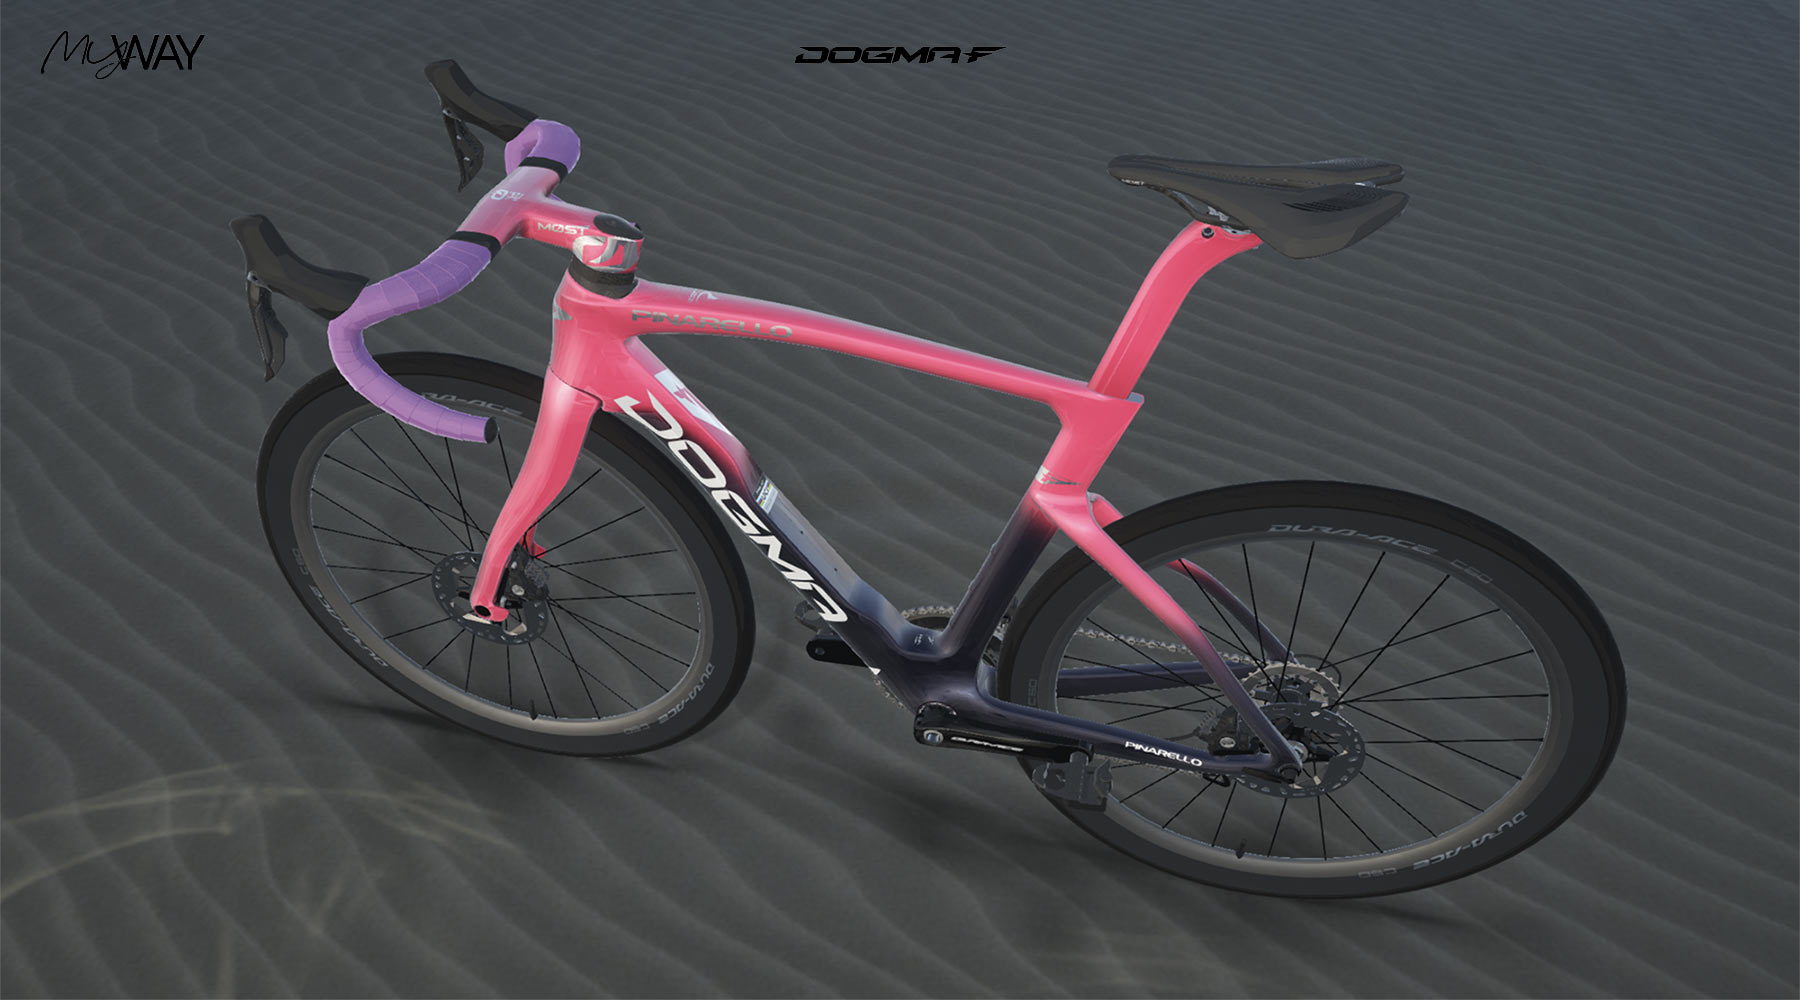 Pinarello MyWay semi-custom painted bespoke Dogma F road bike, online rendering angled